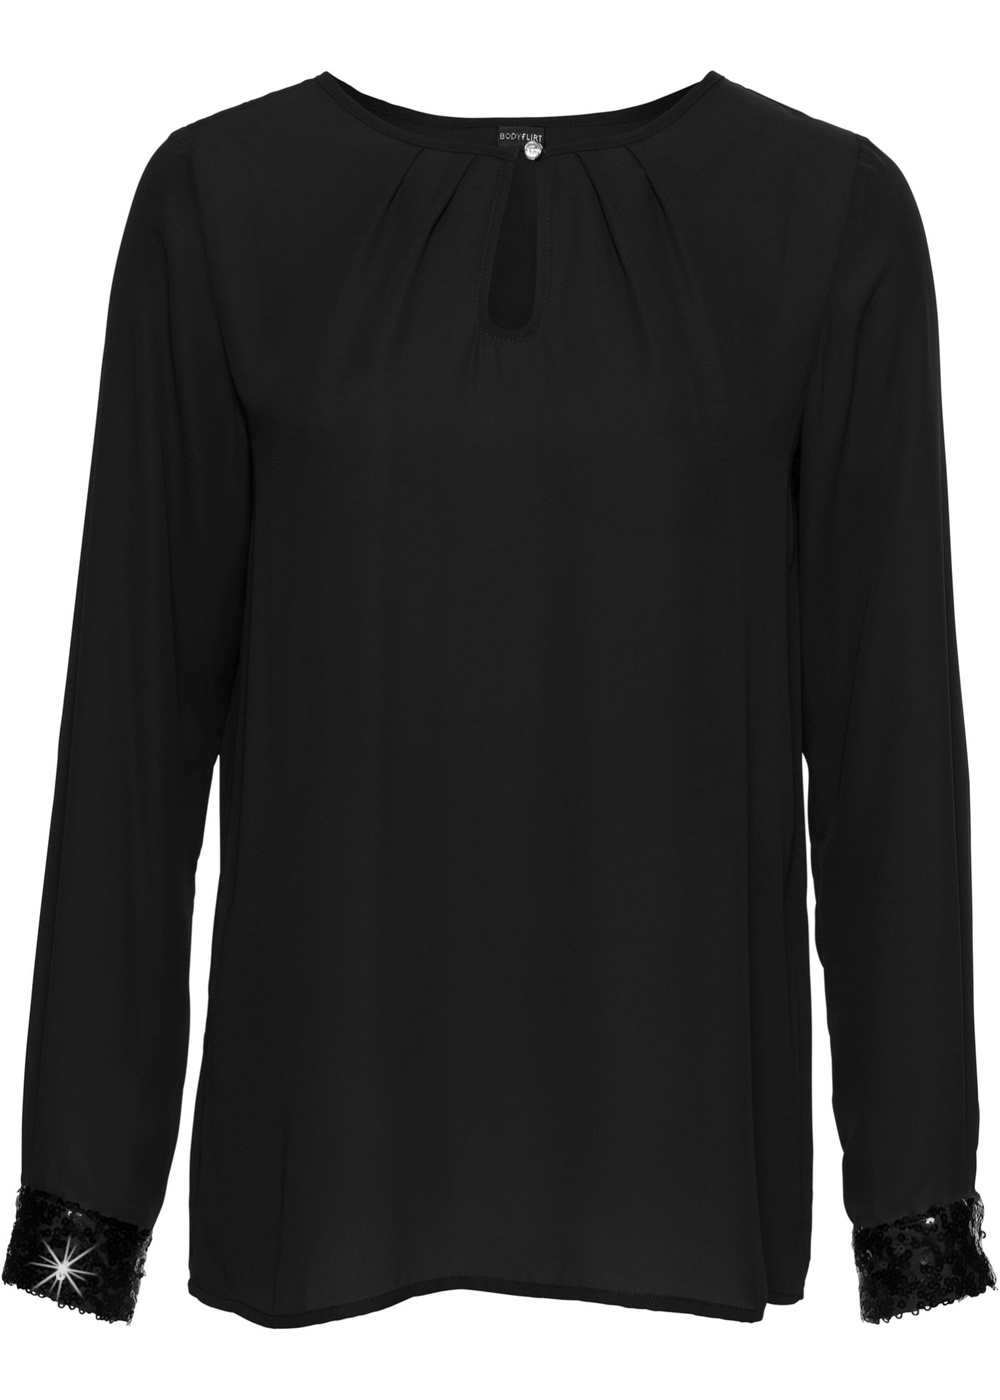 Легкая черная кофта. Bonprix блузка BODYFLIRT. Bonprix туника удлинённая. Черная блузка. Черная кофта с длинными рукавами.